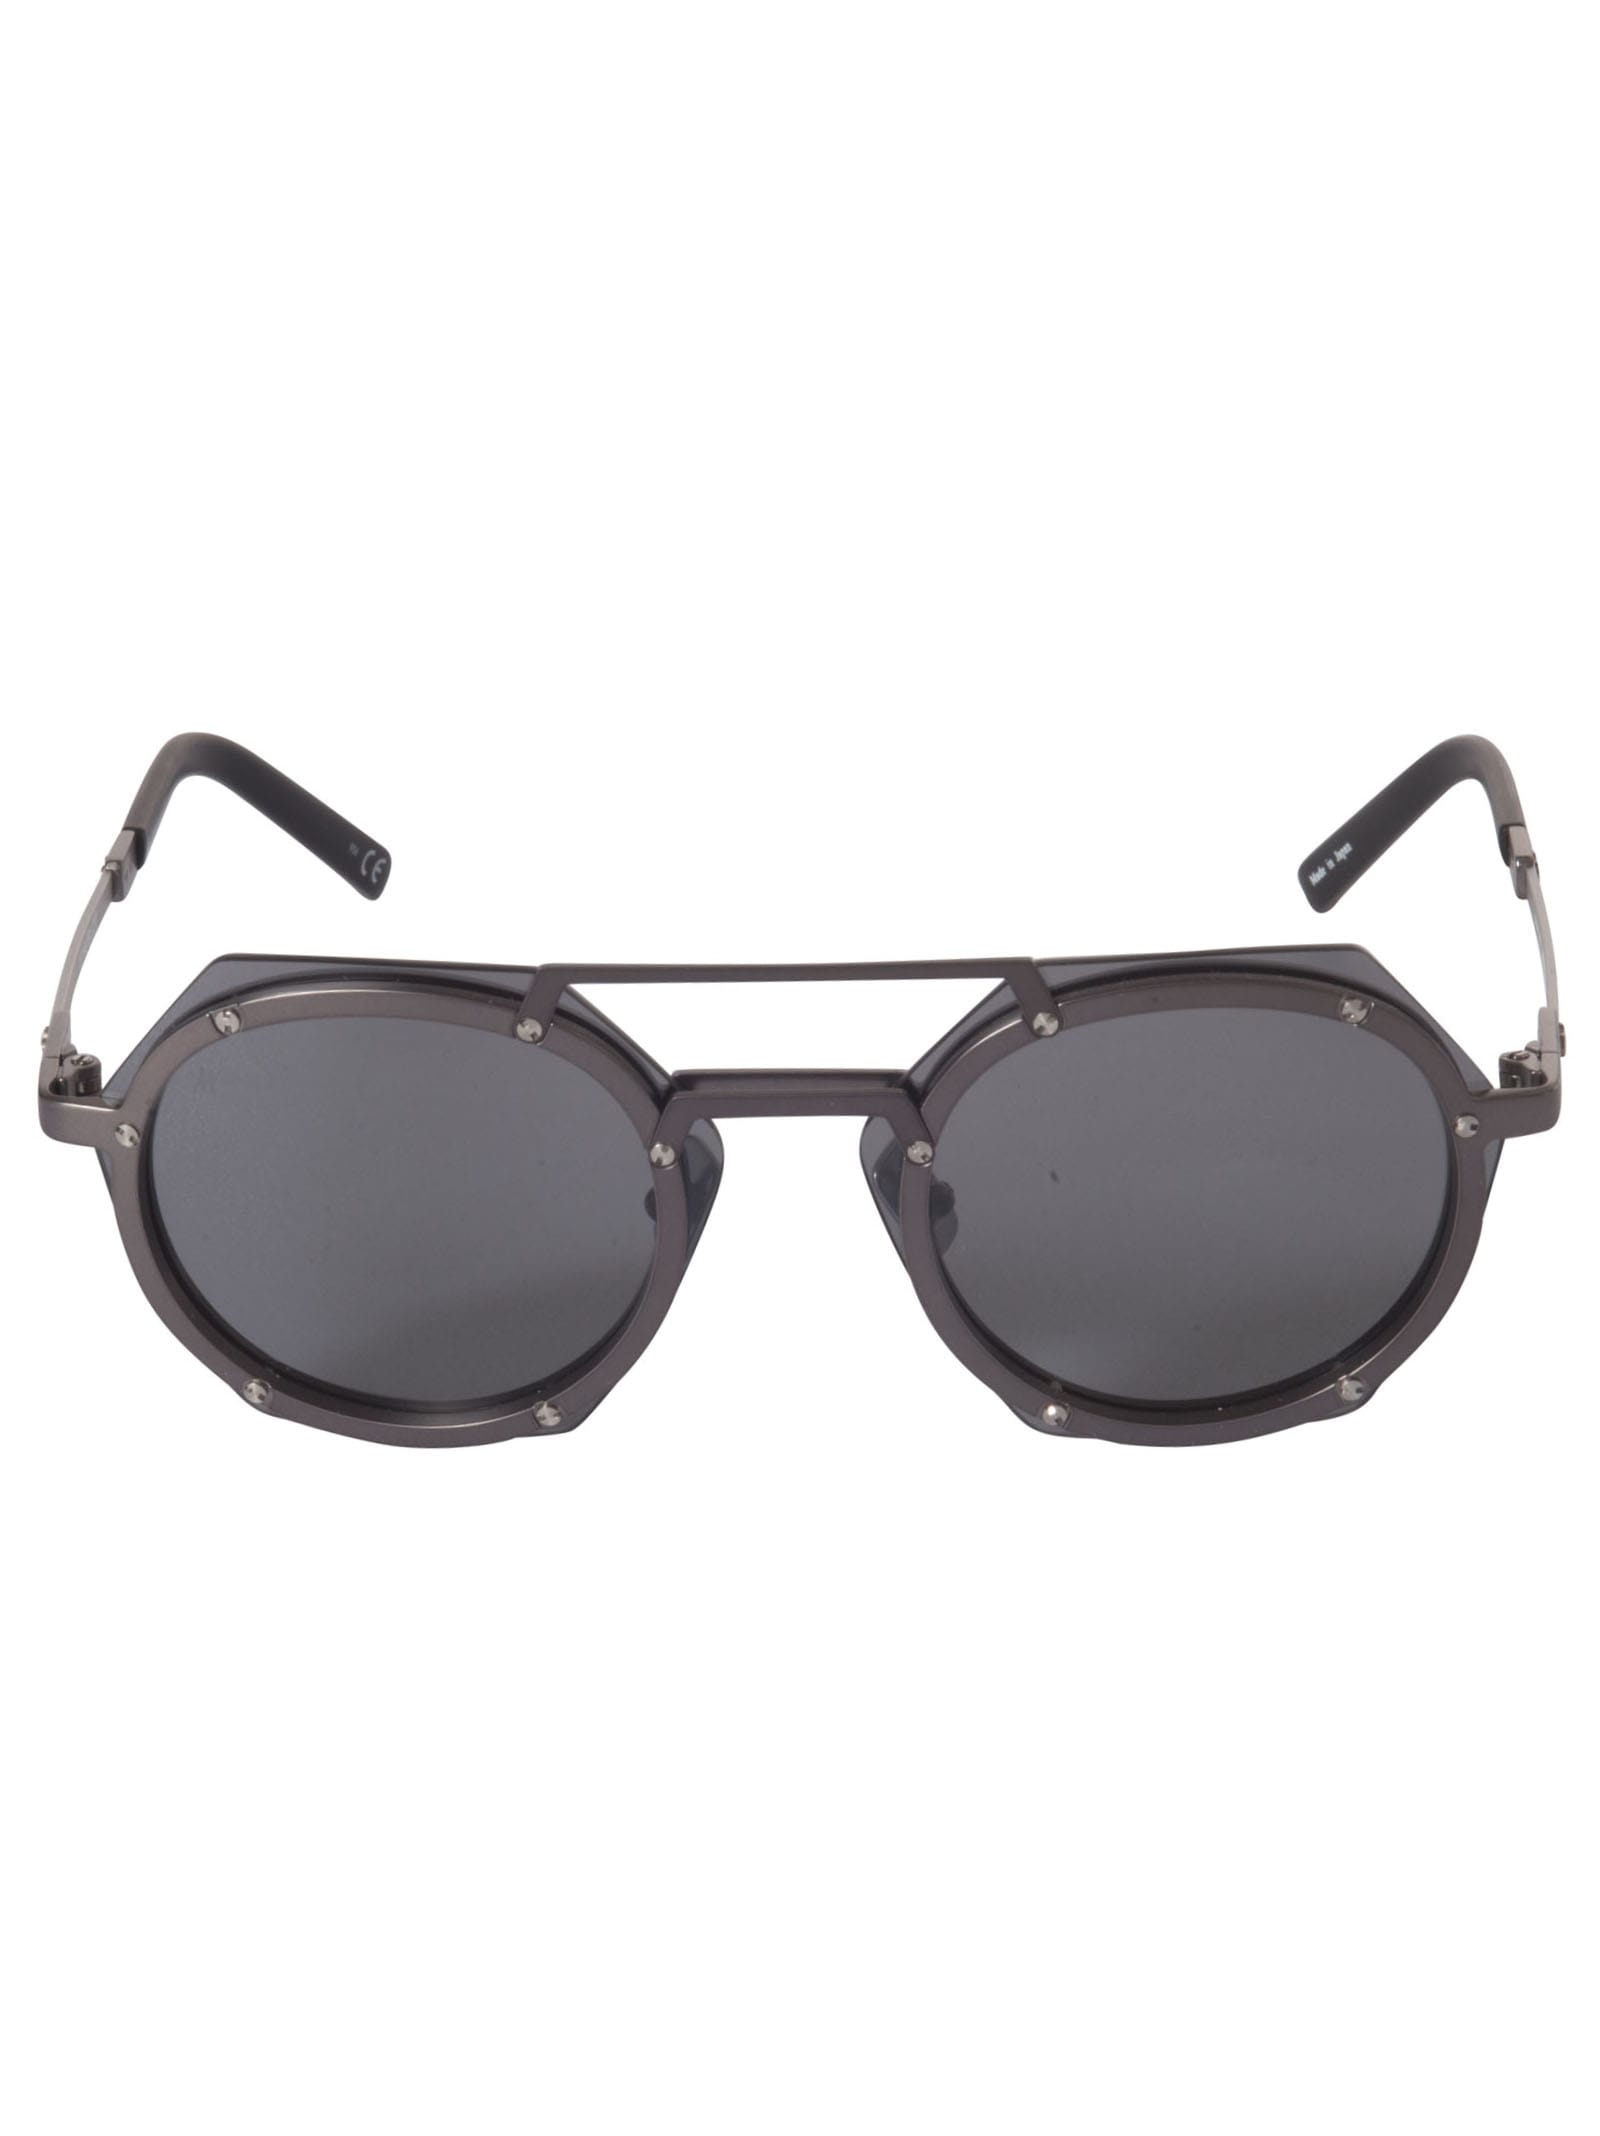 Hublot Independent Sunglasses In Black